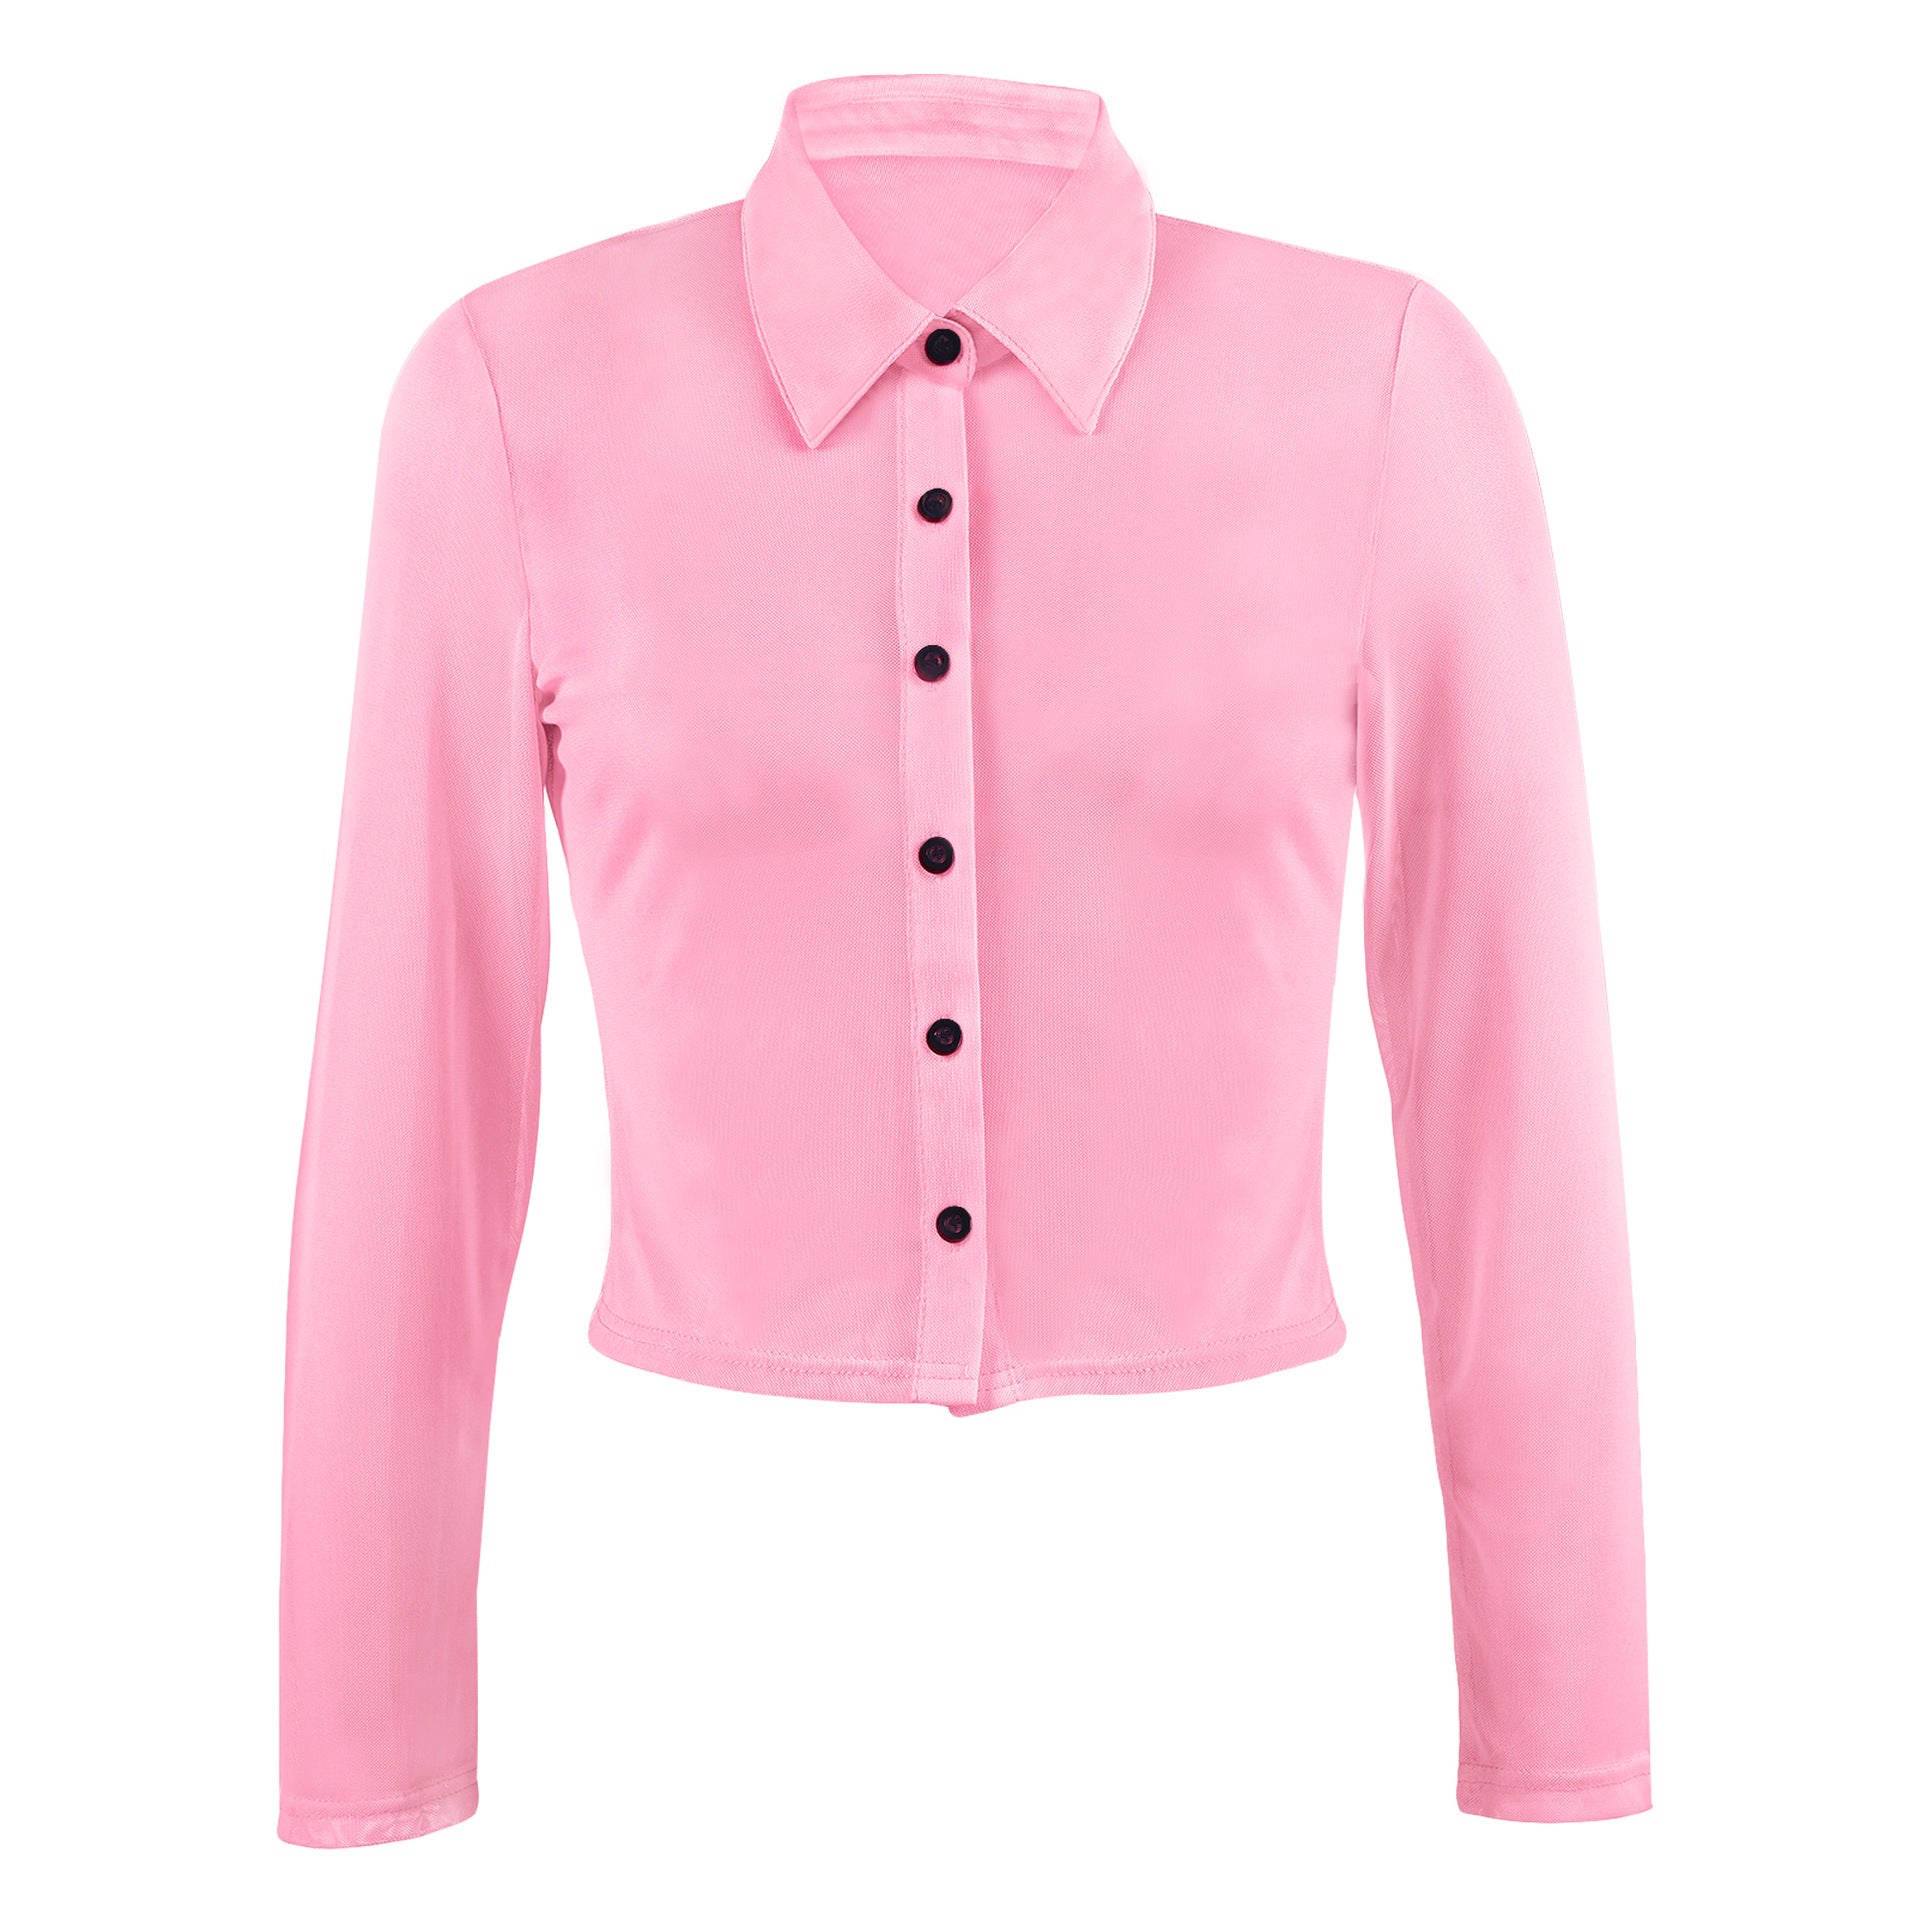 Fashion Women Sexy Shirt Tops-Shirts & Tops-Pink-S-Free Shipping at meselling99